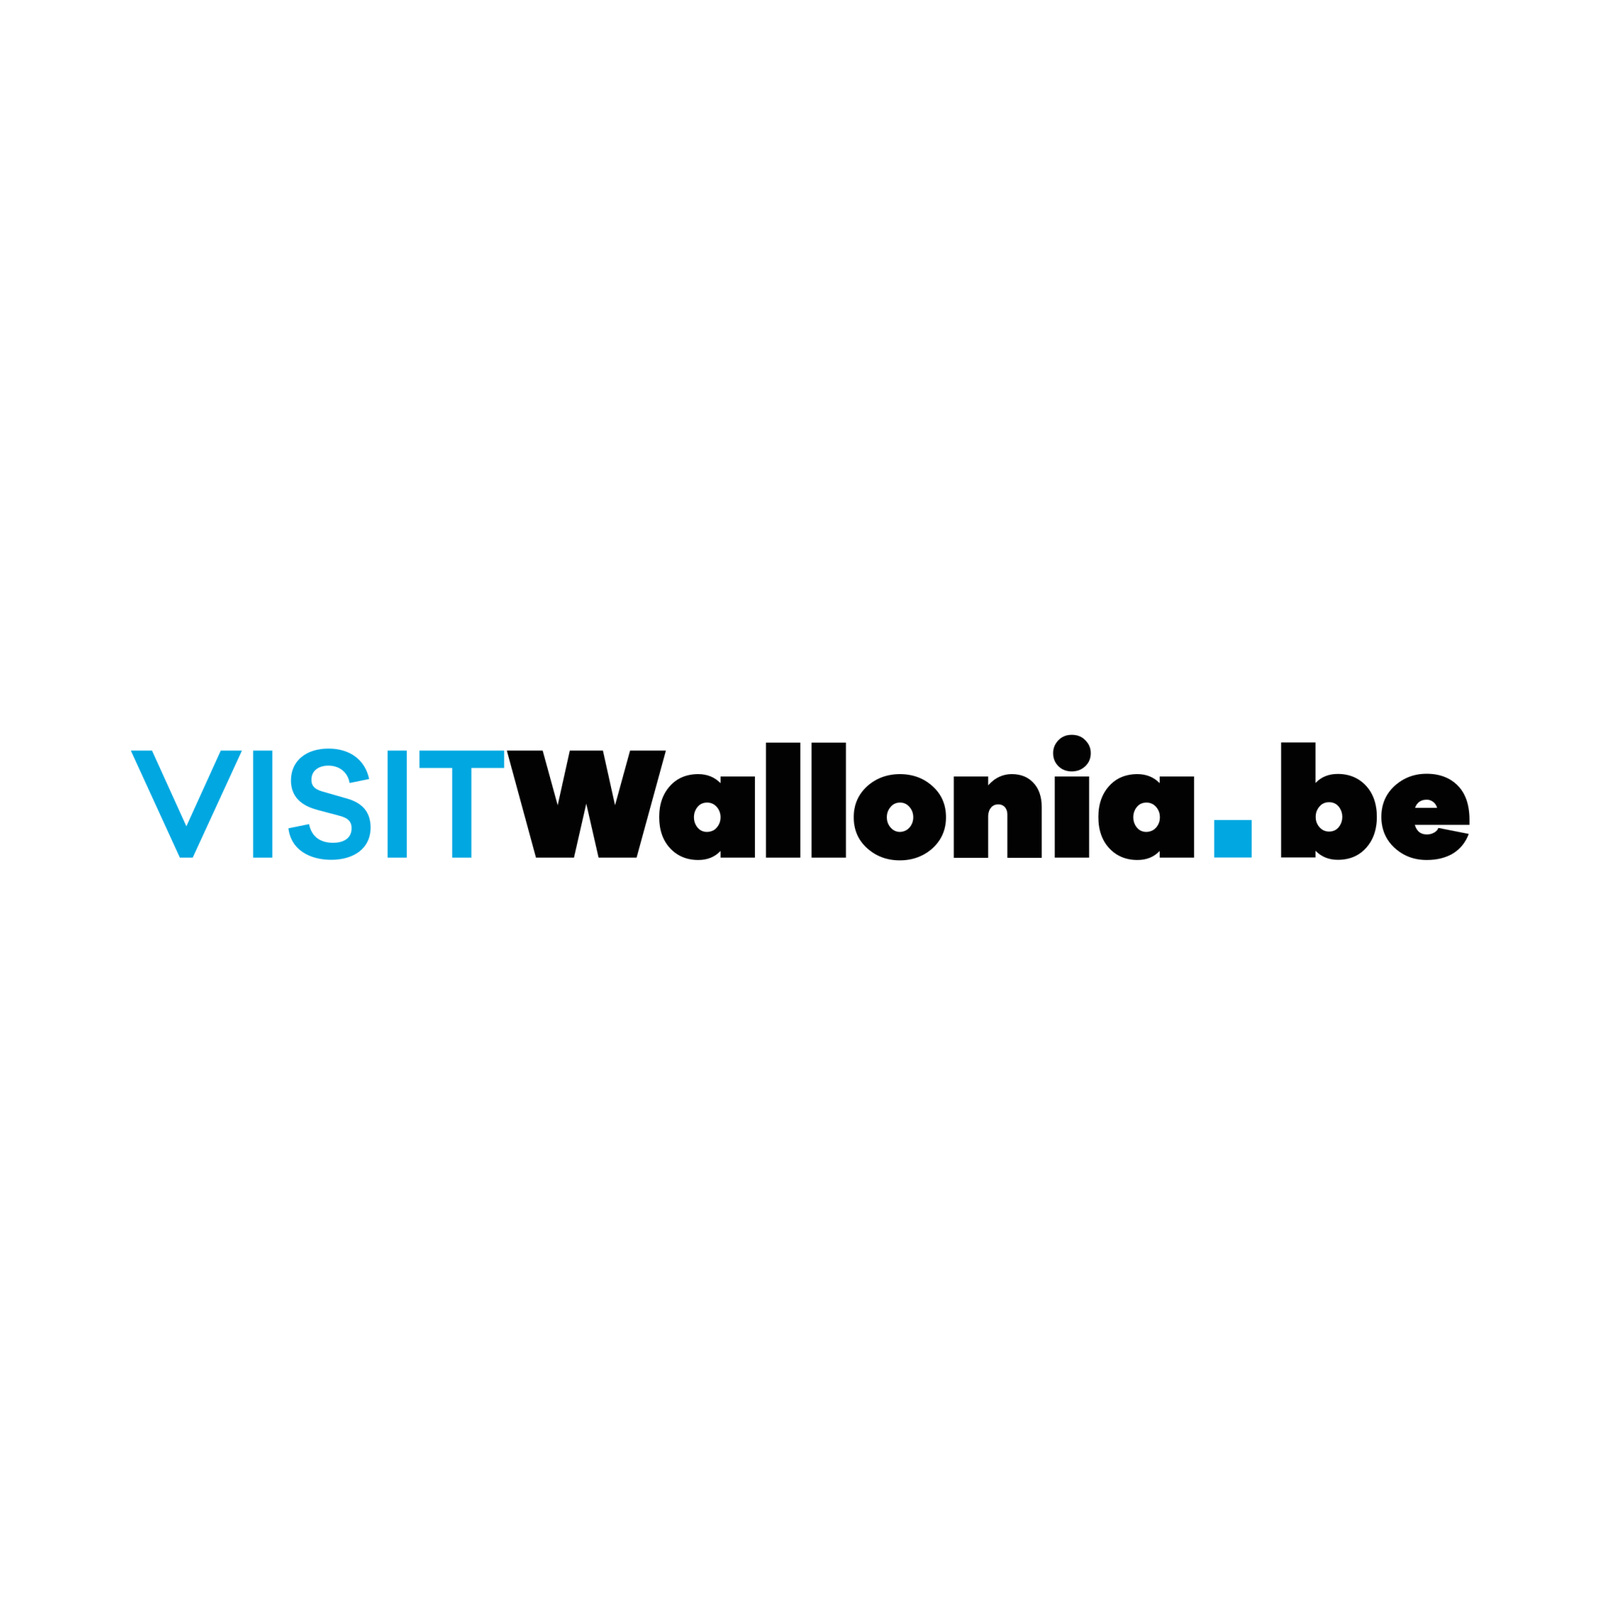 00043617-WBT-Bloc marque – VISITWallonia.be – Horizontal – SVG